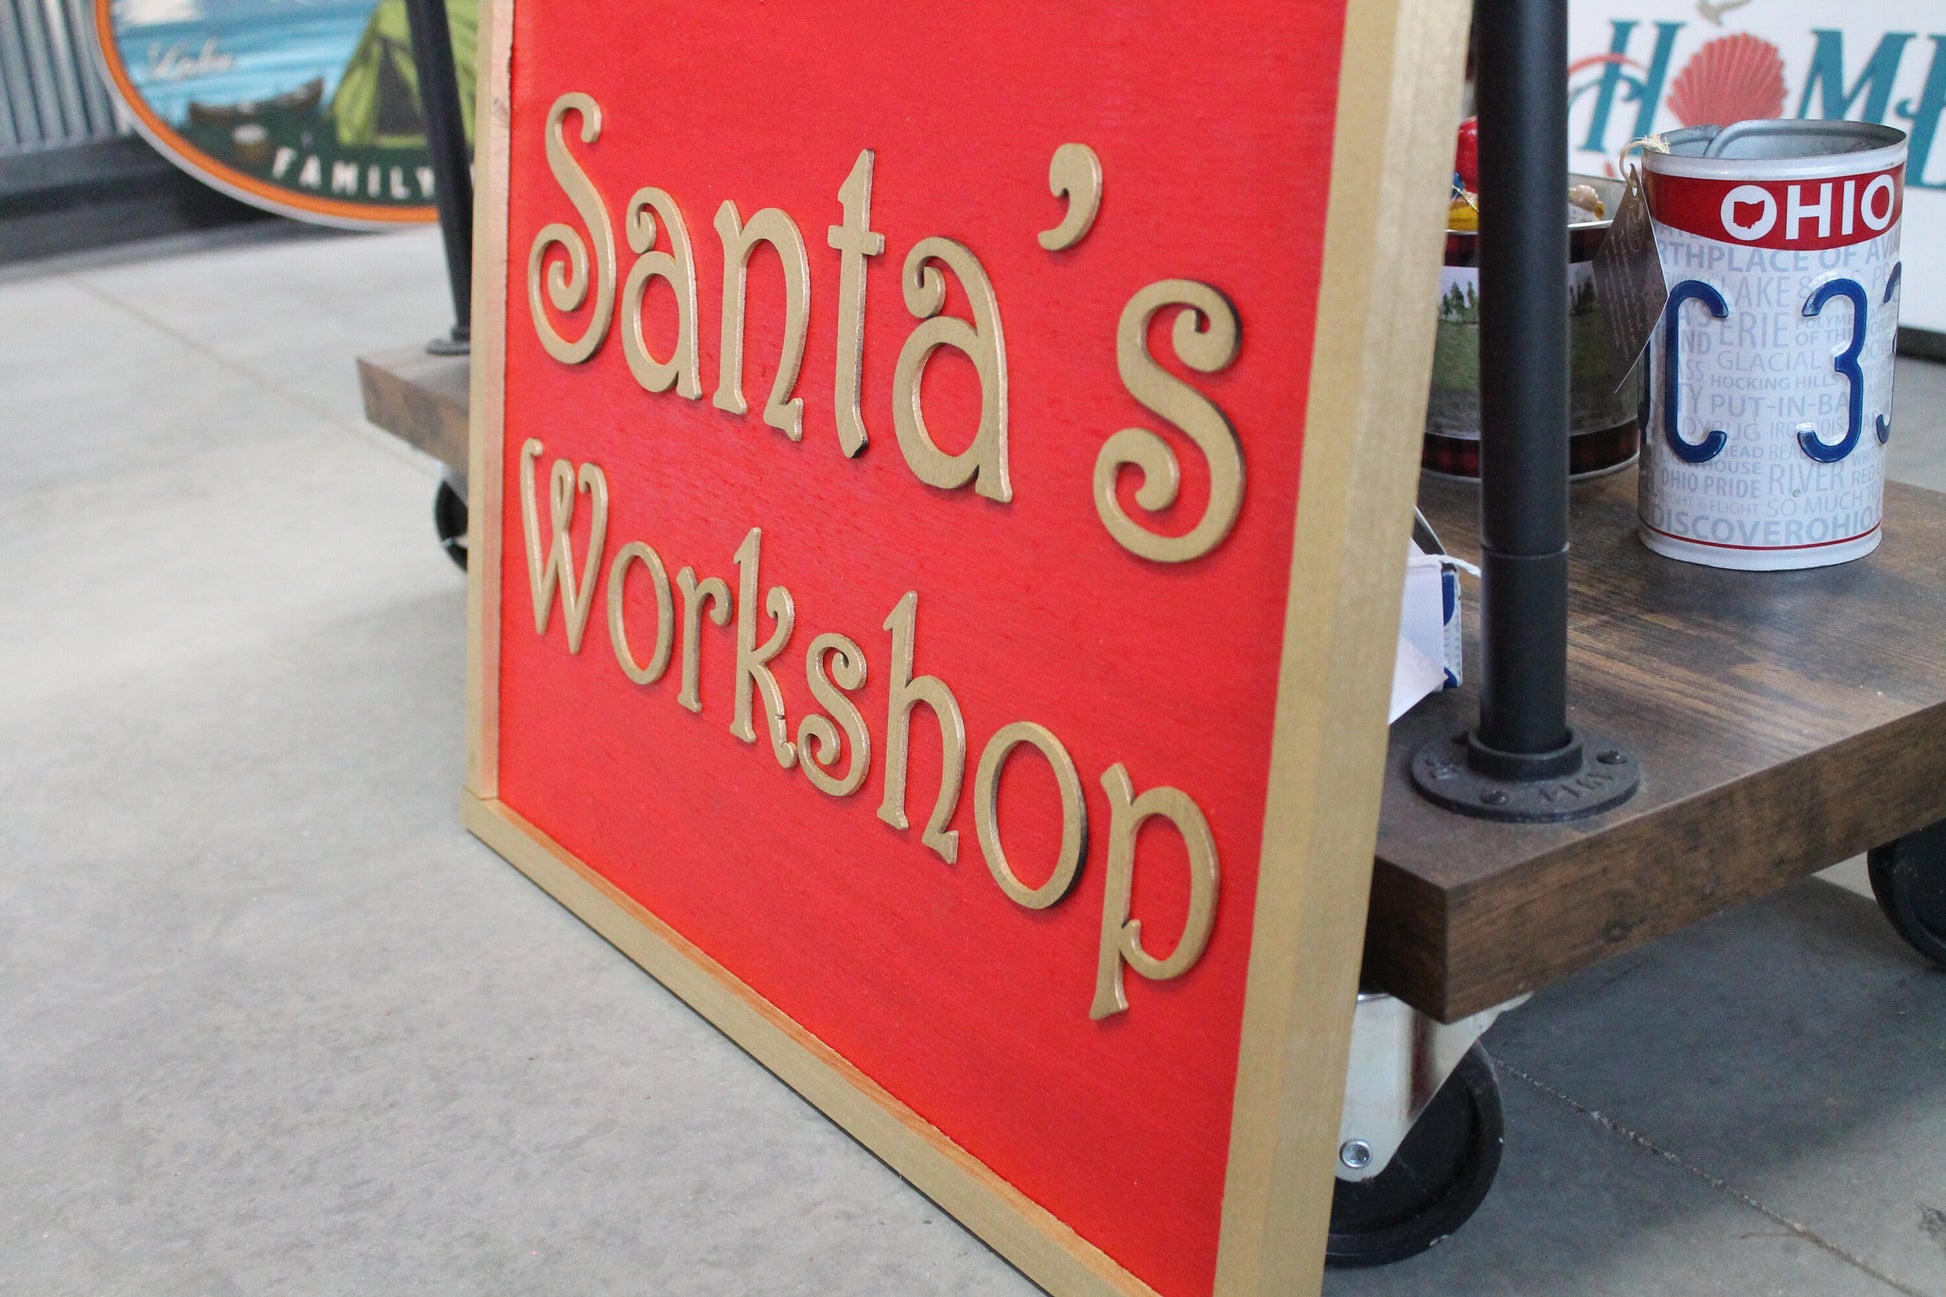 Santas Workshop Rectangle Raised Wooden 3D Sign Christmas Sign Seasonal Red Handmade Novelty Decor